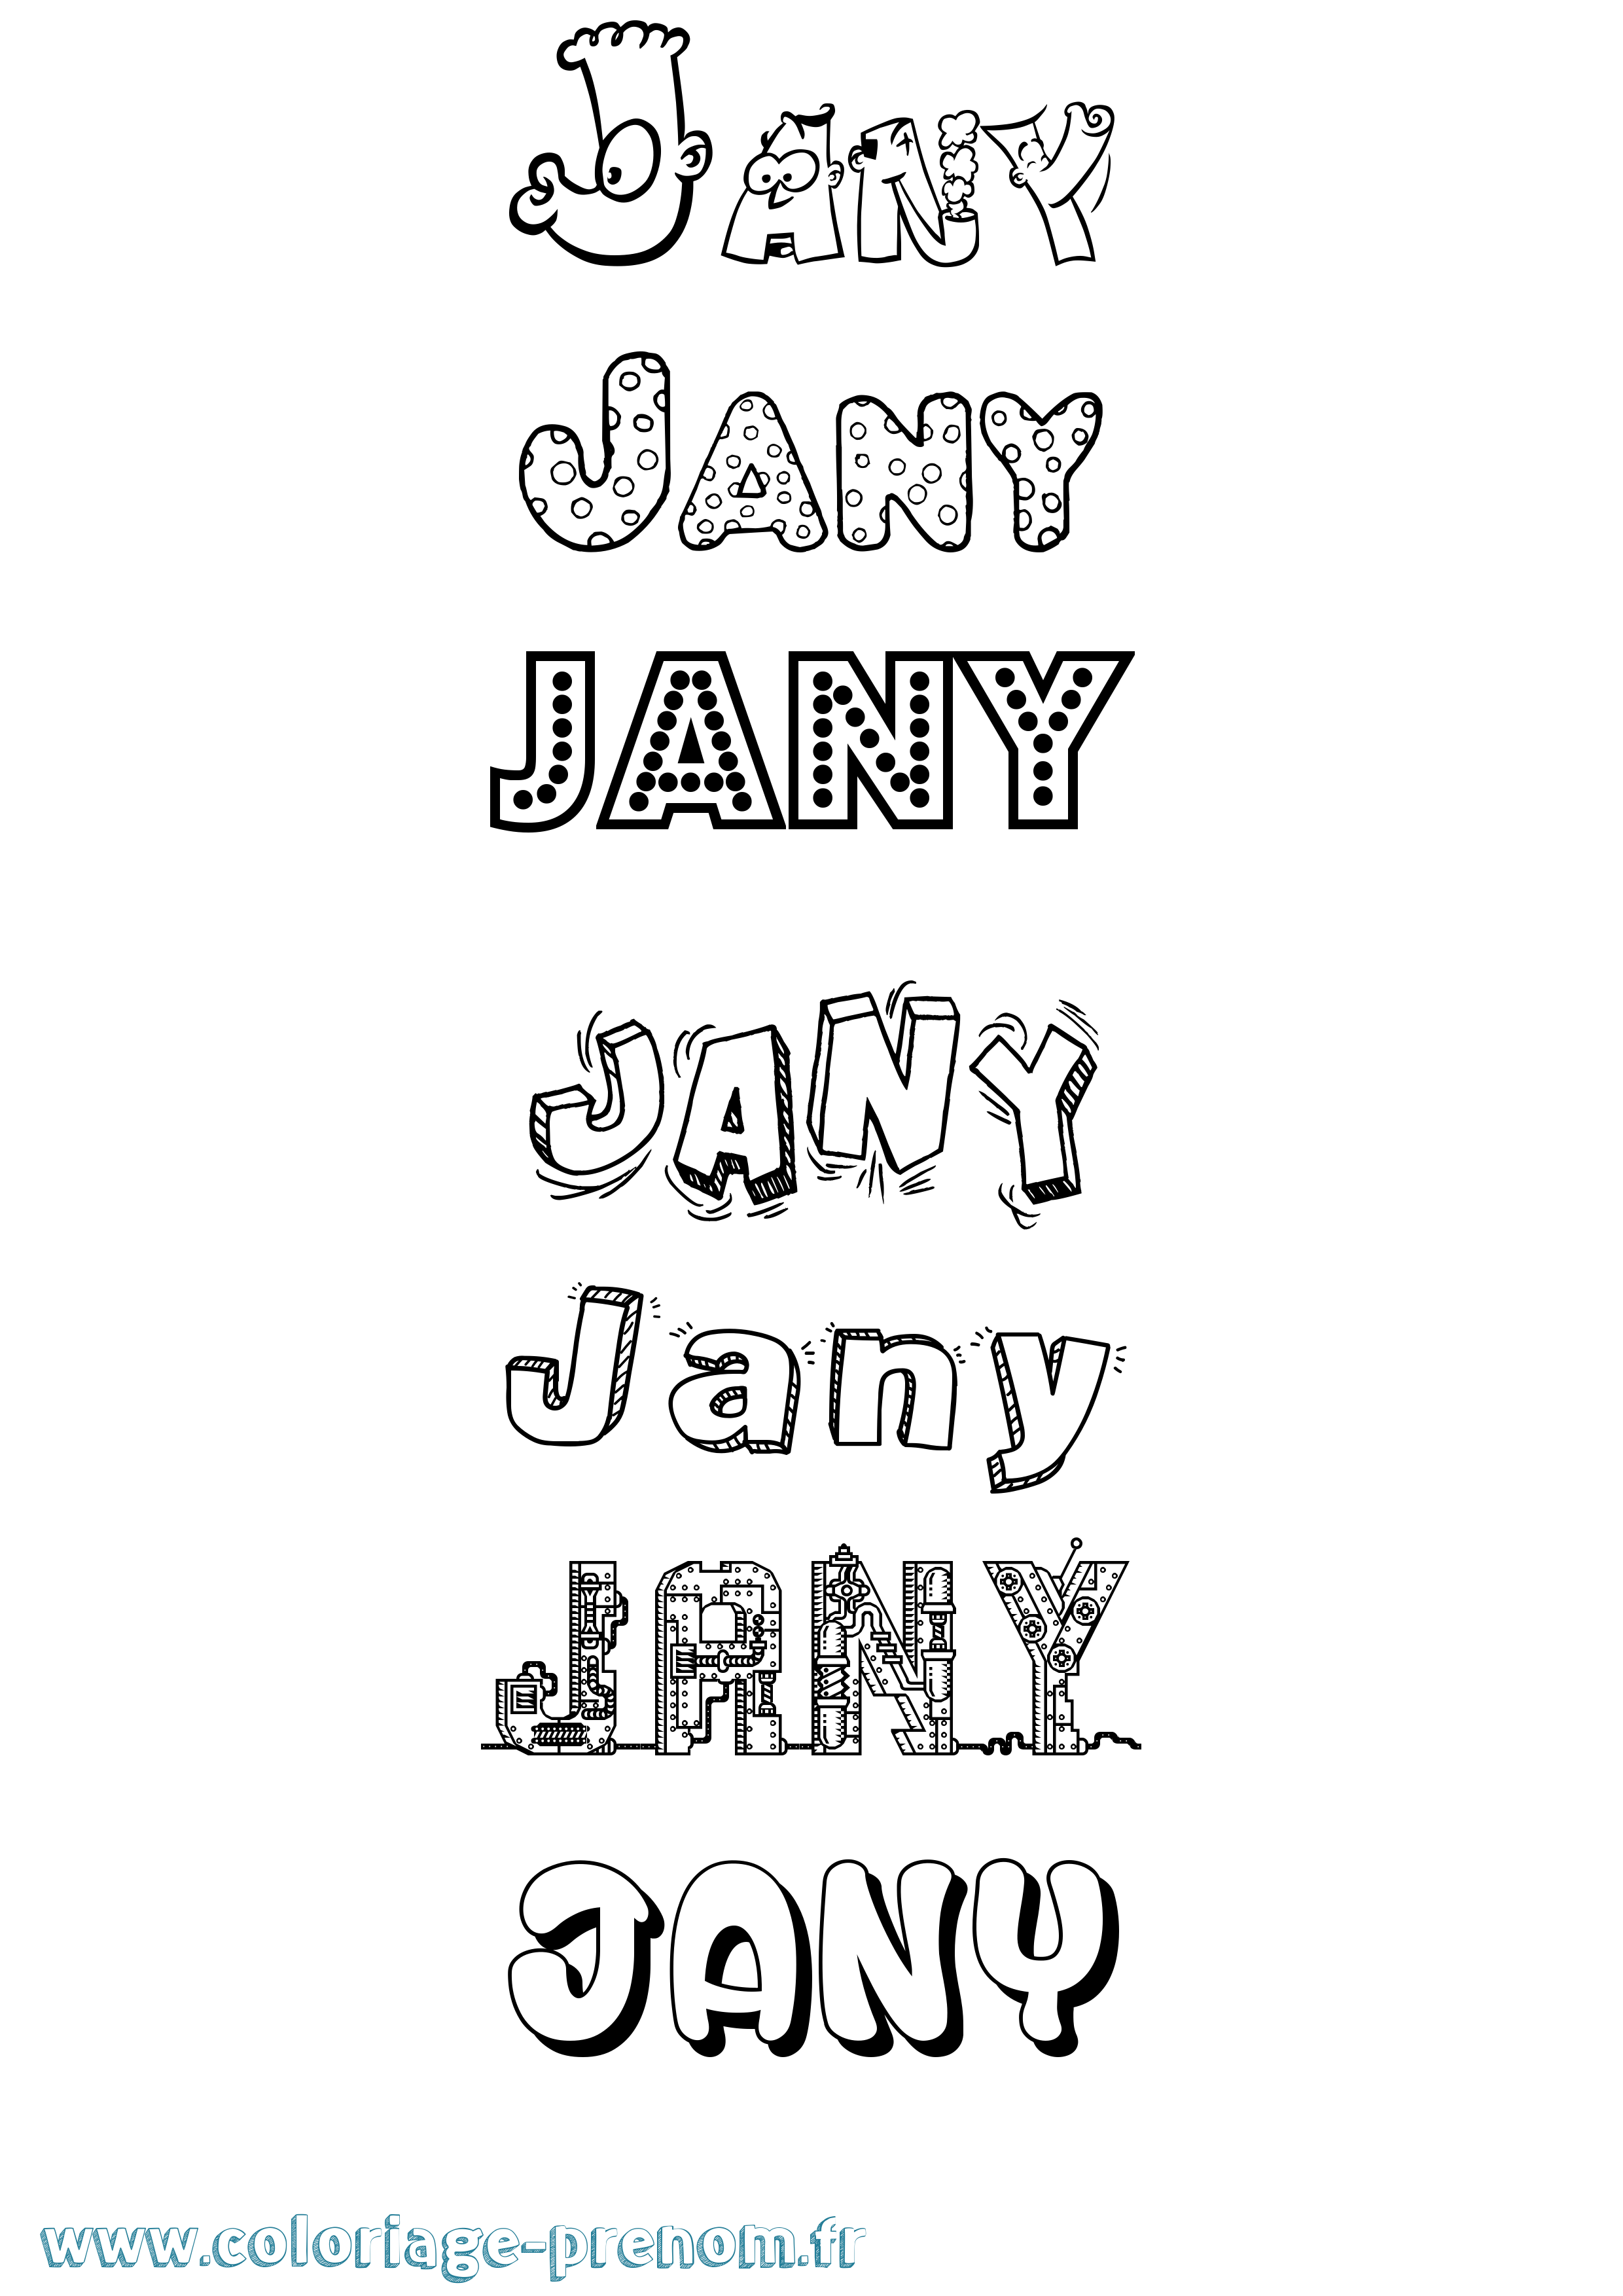 Coloriage prénom Jany Fun